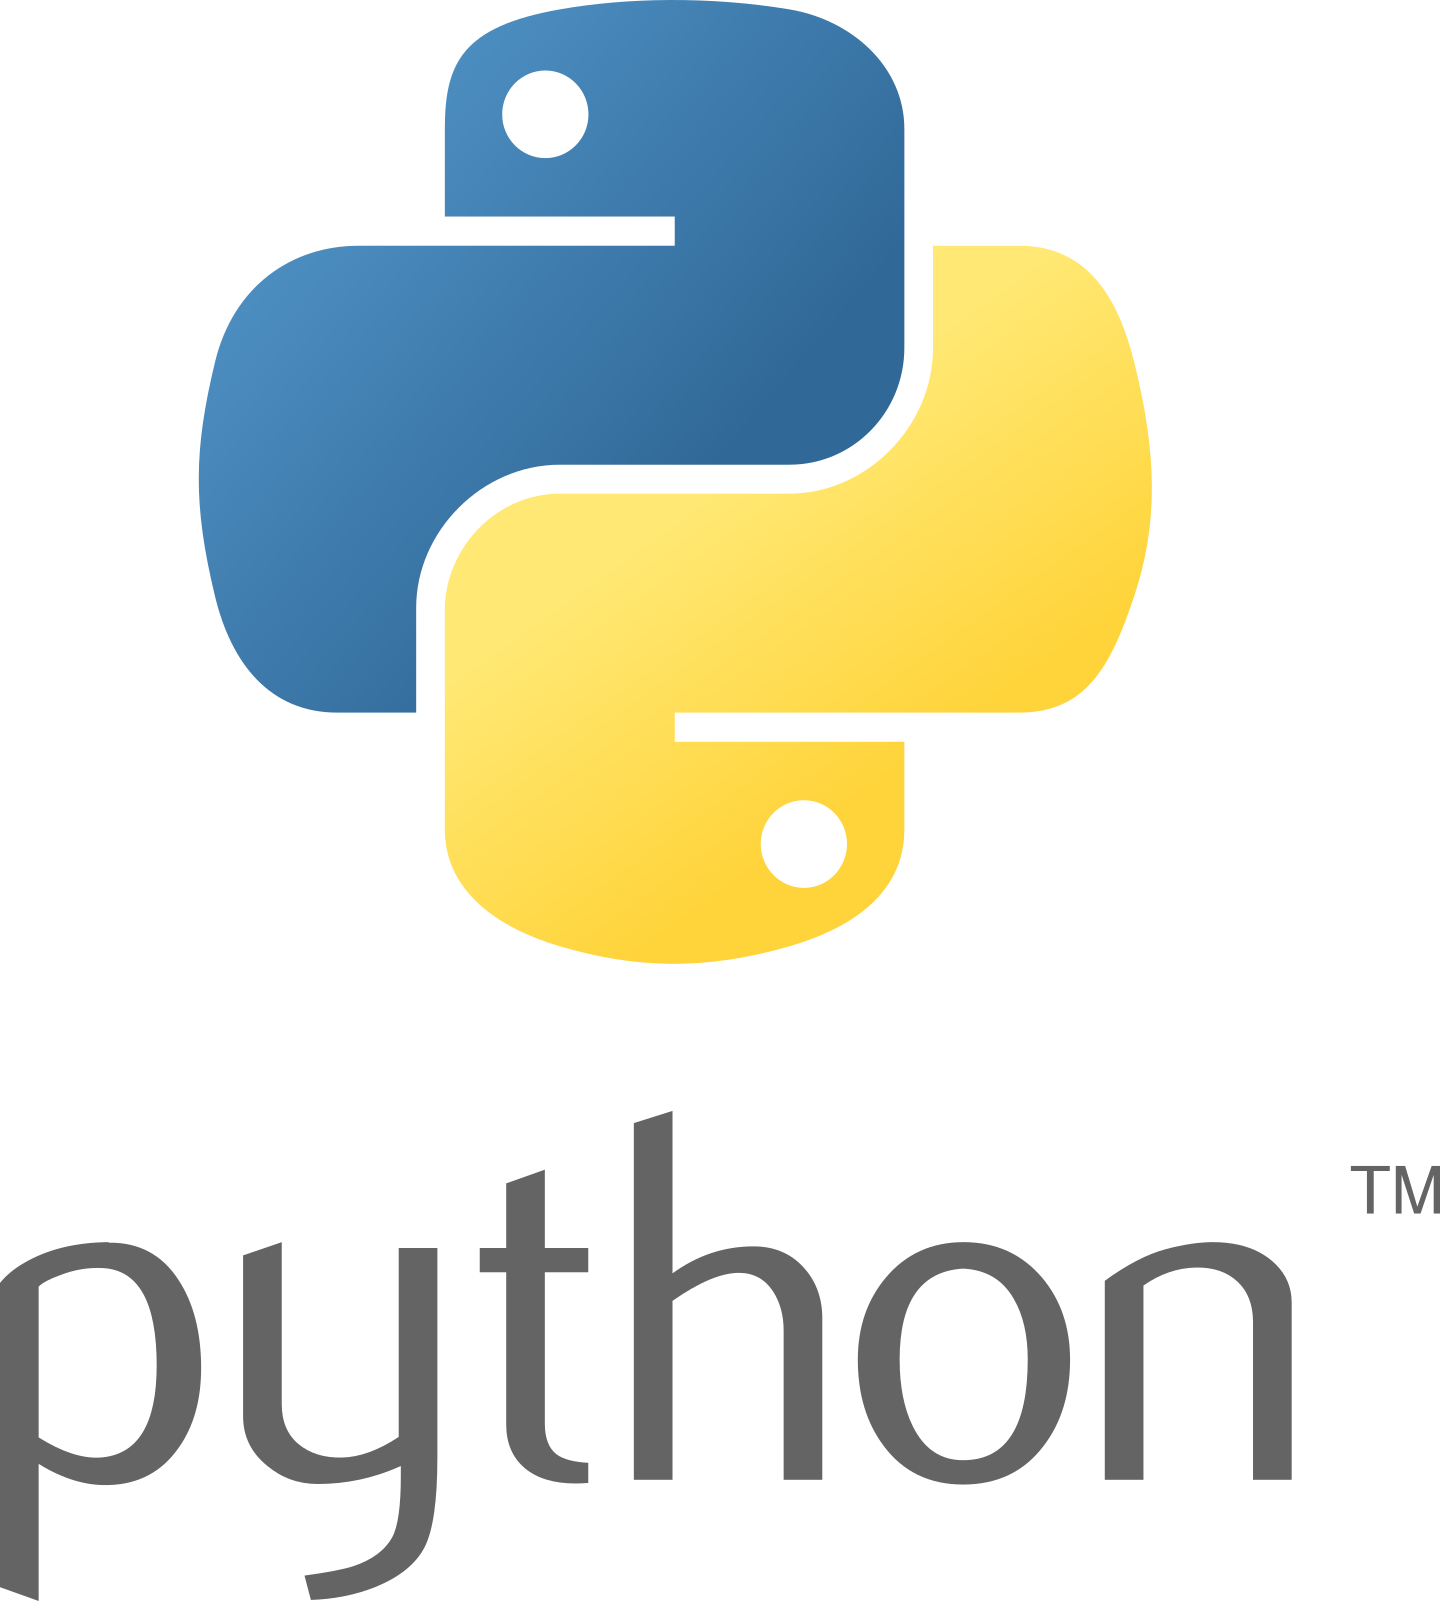 python logo 2 - Python Logo